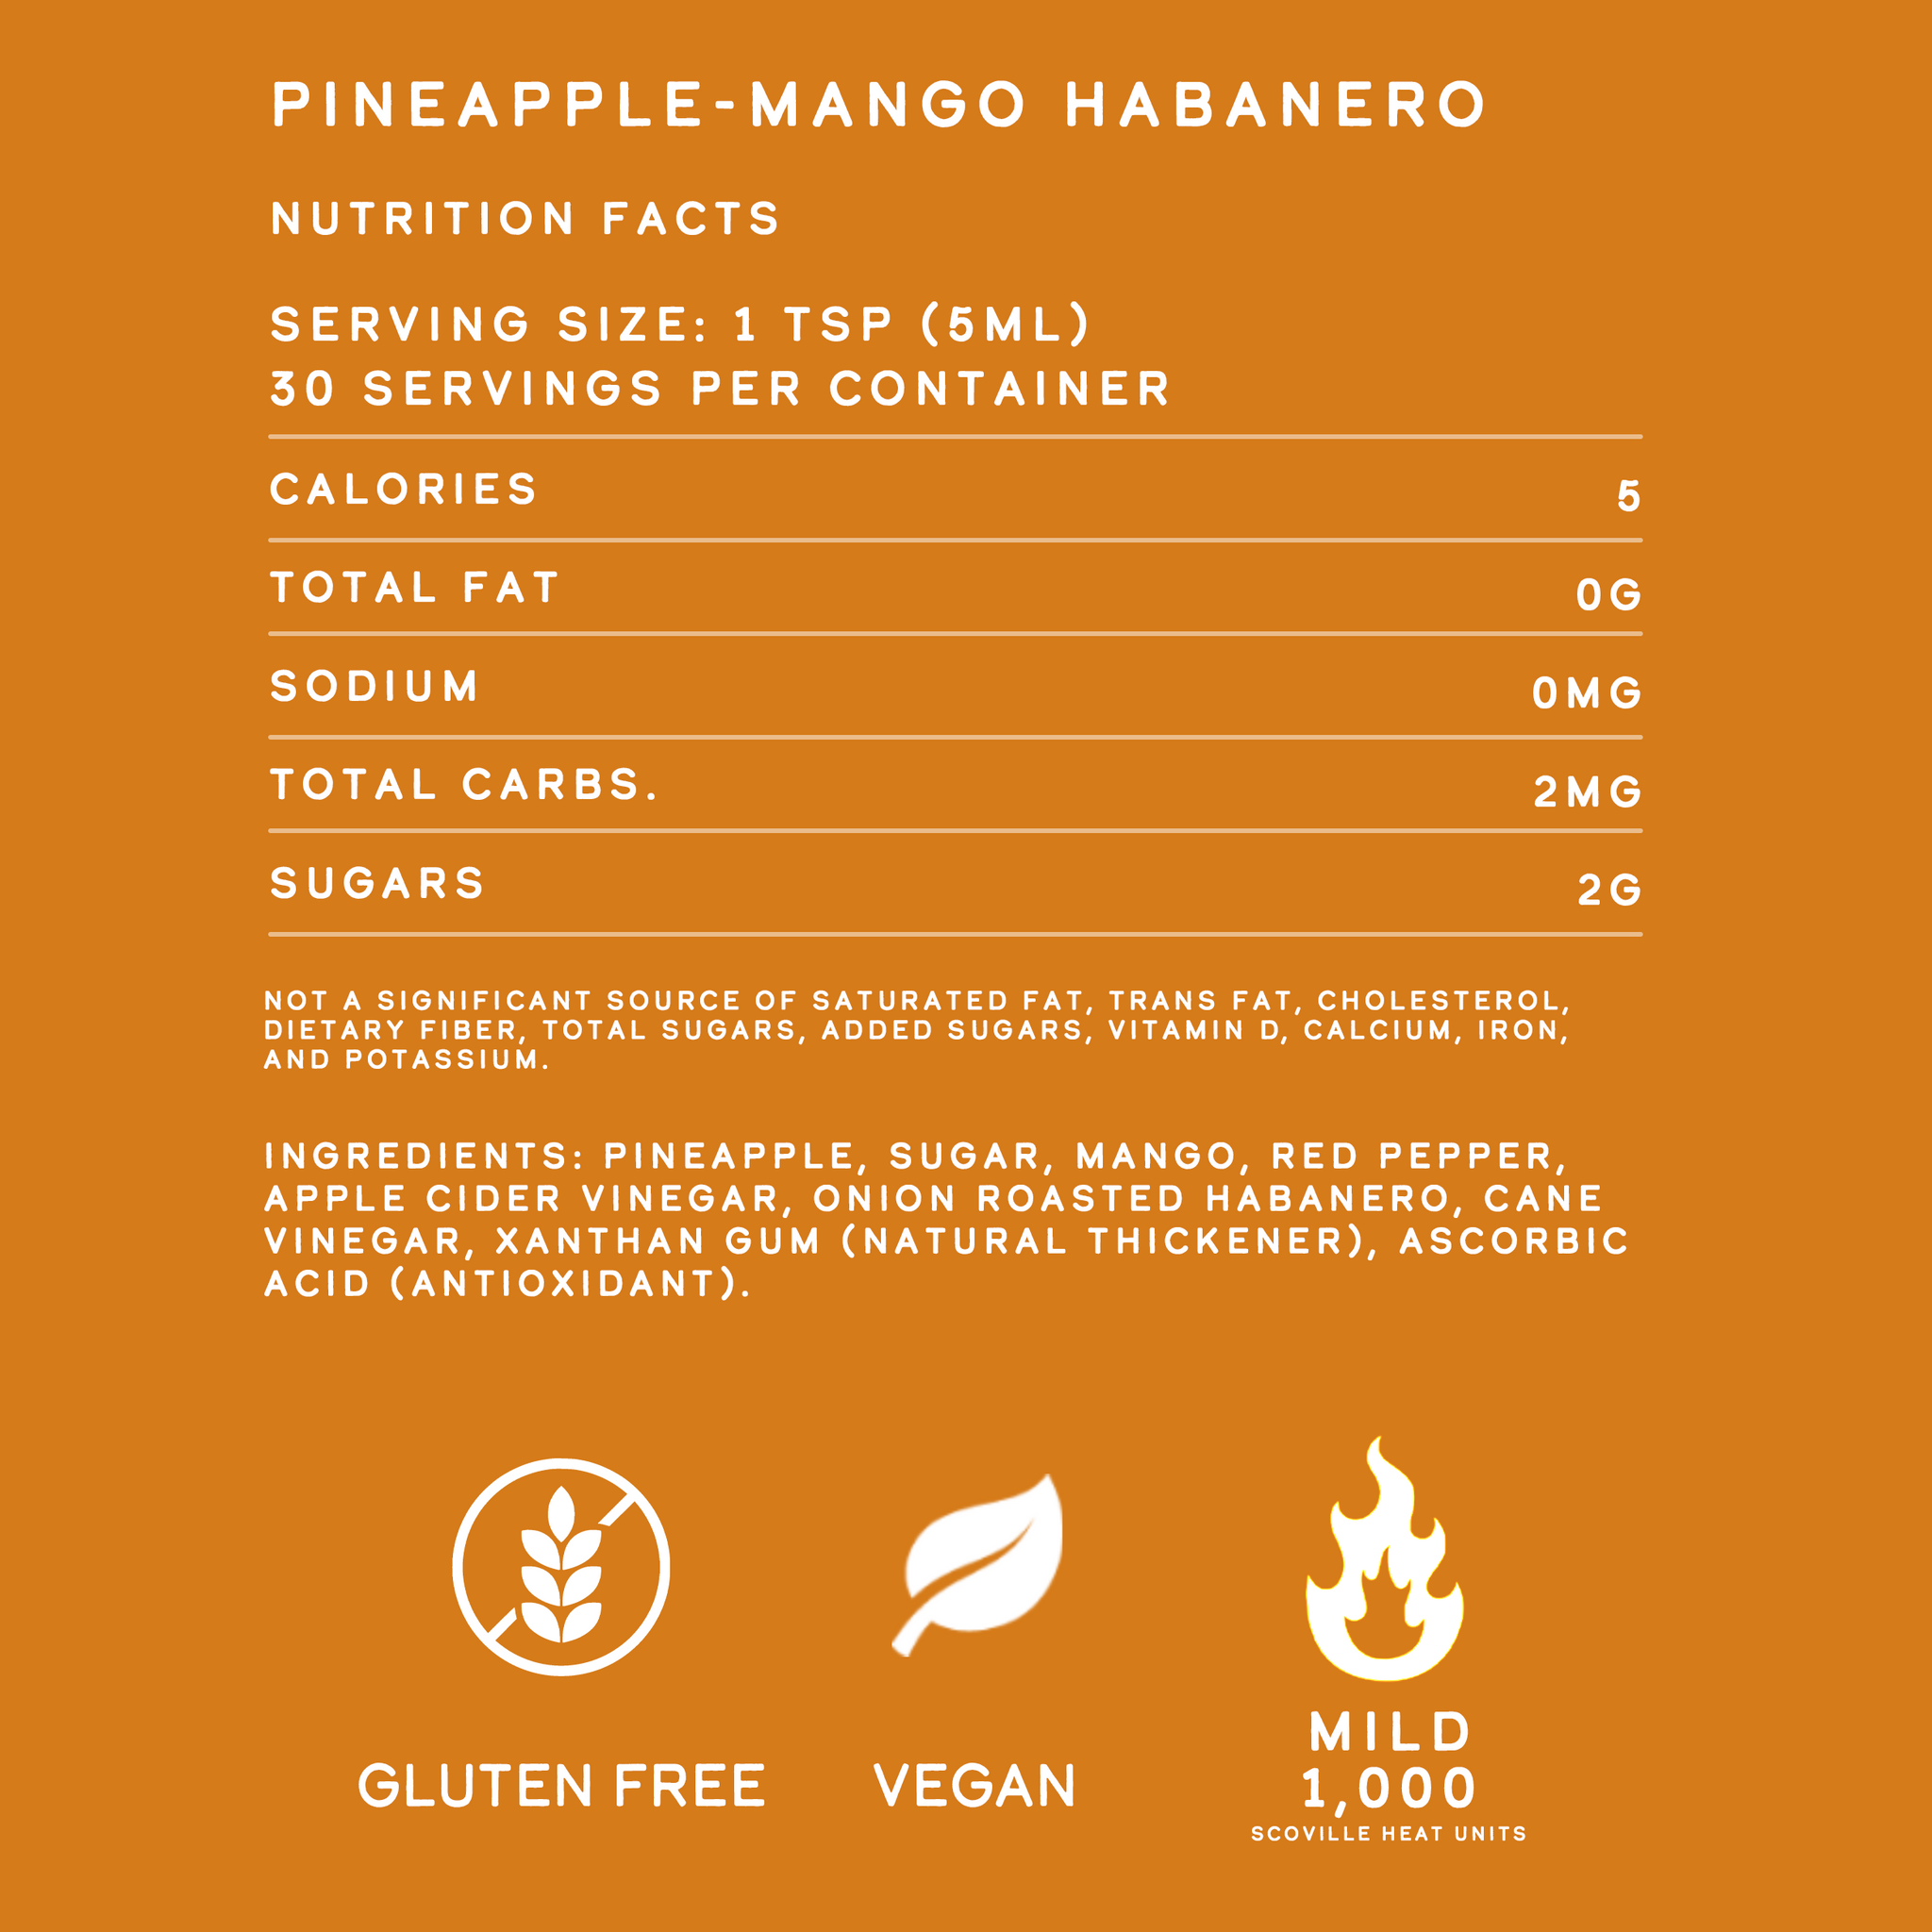 Pineapple-Mango Habanero Hot Sauce